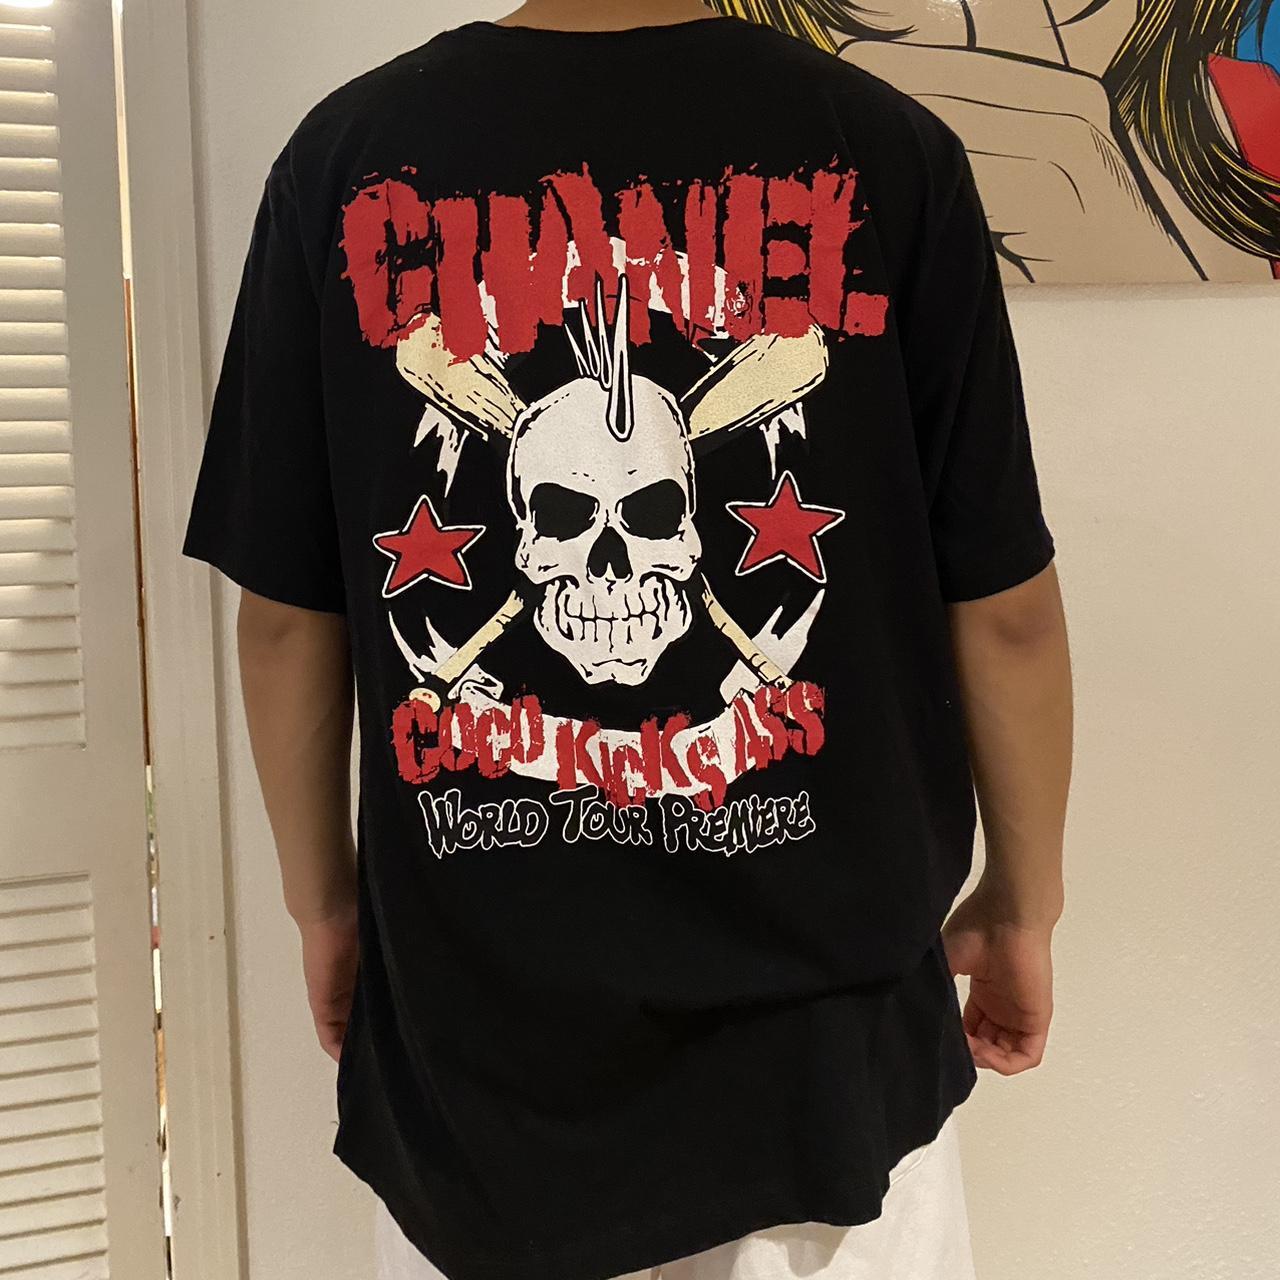 Chanel world tour premiere tee shirt size 2XL large